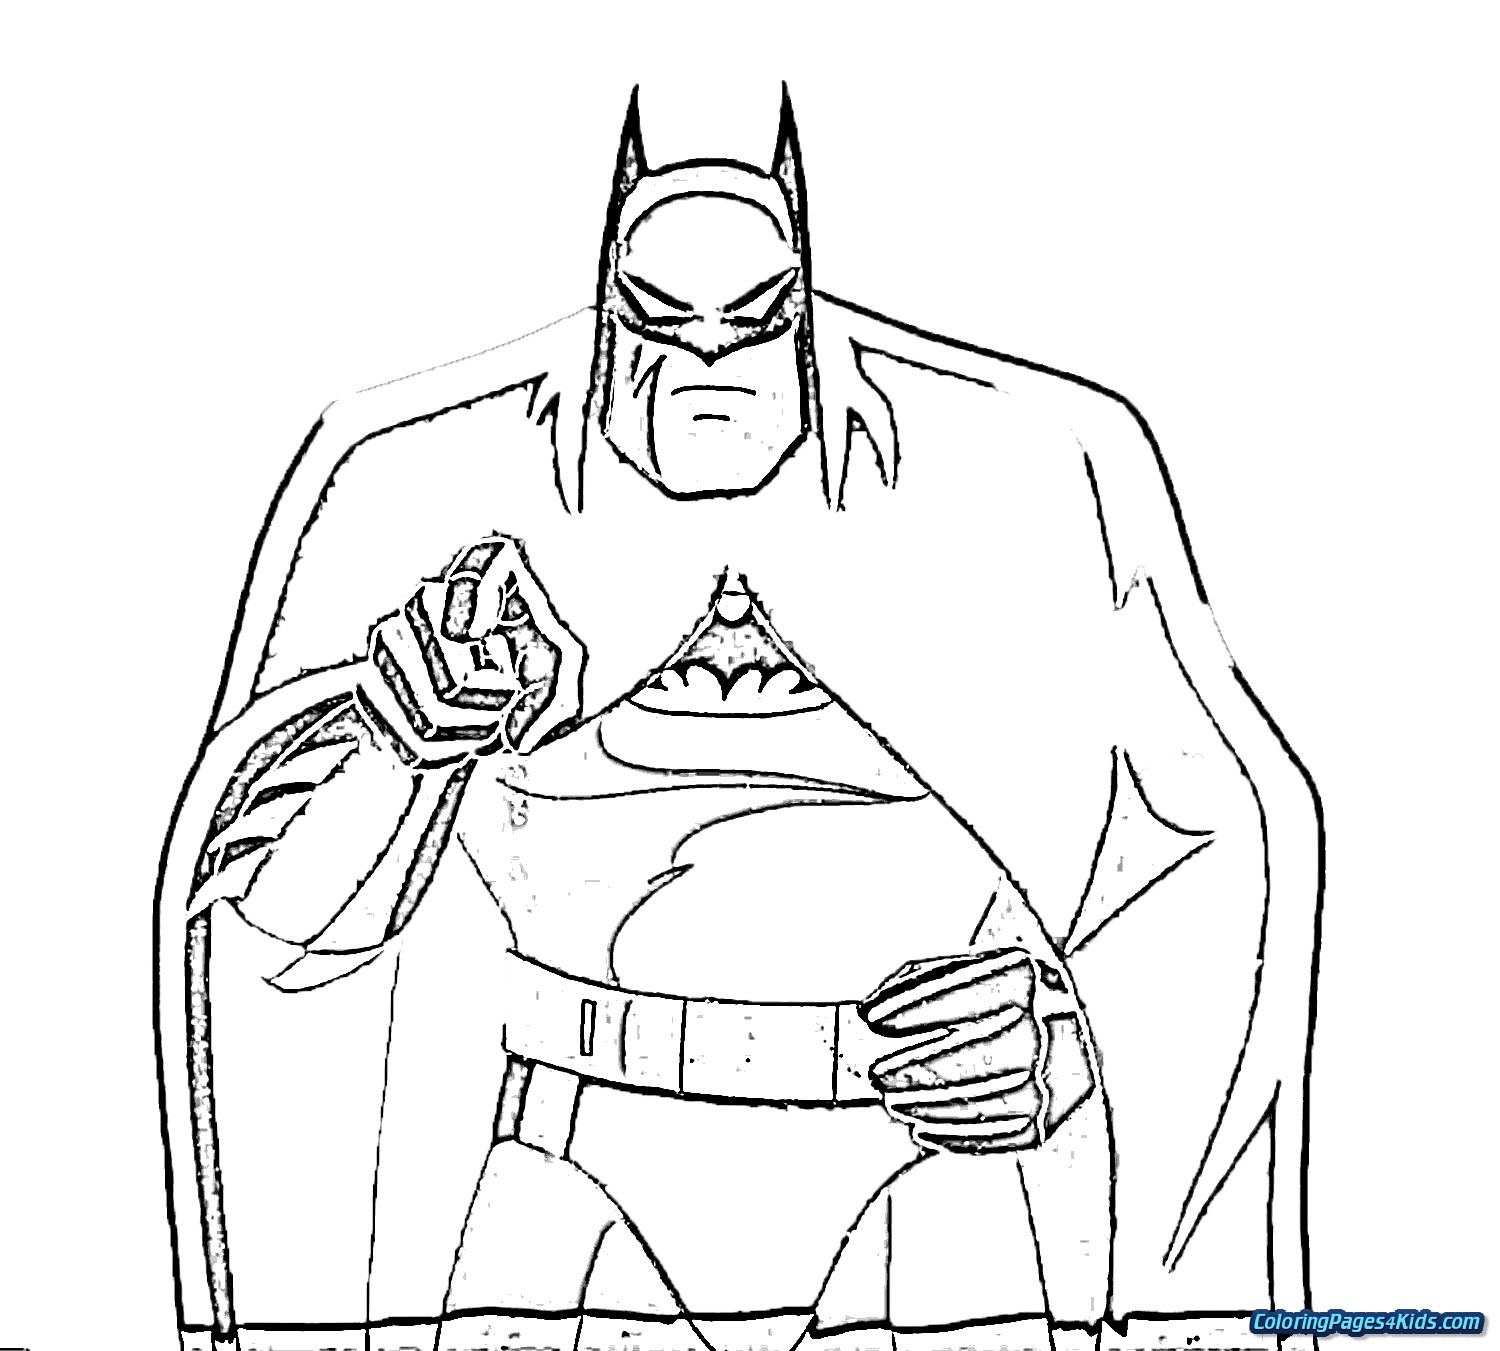 Batman Vs Superman Coloring Pages | Free Printable Coloring ...